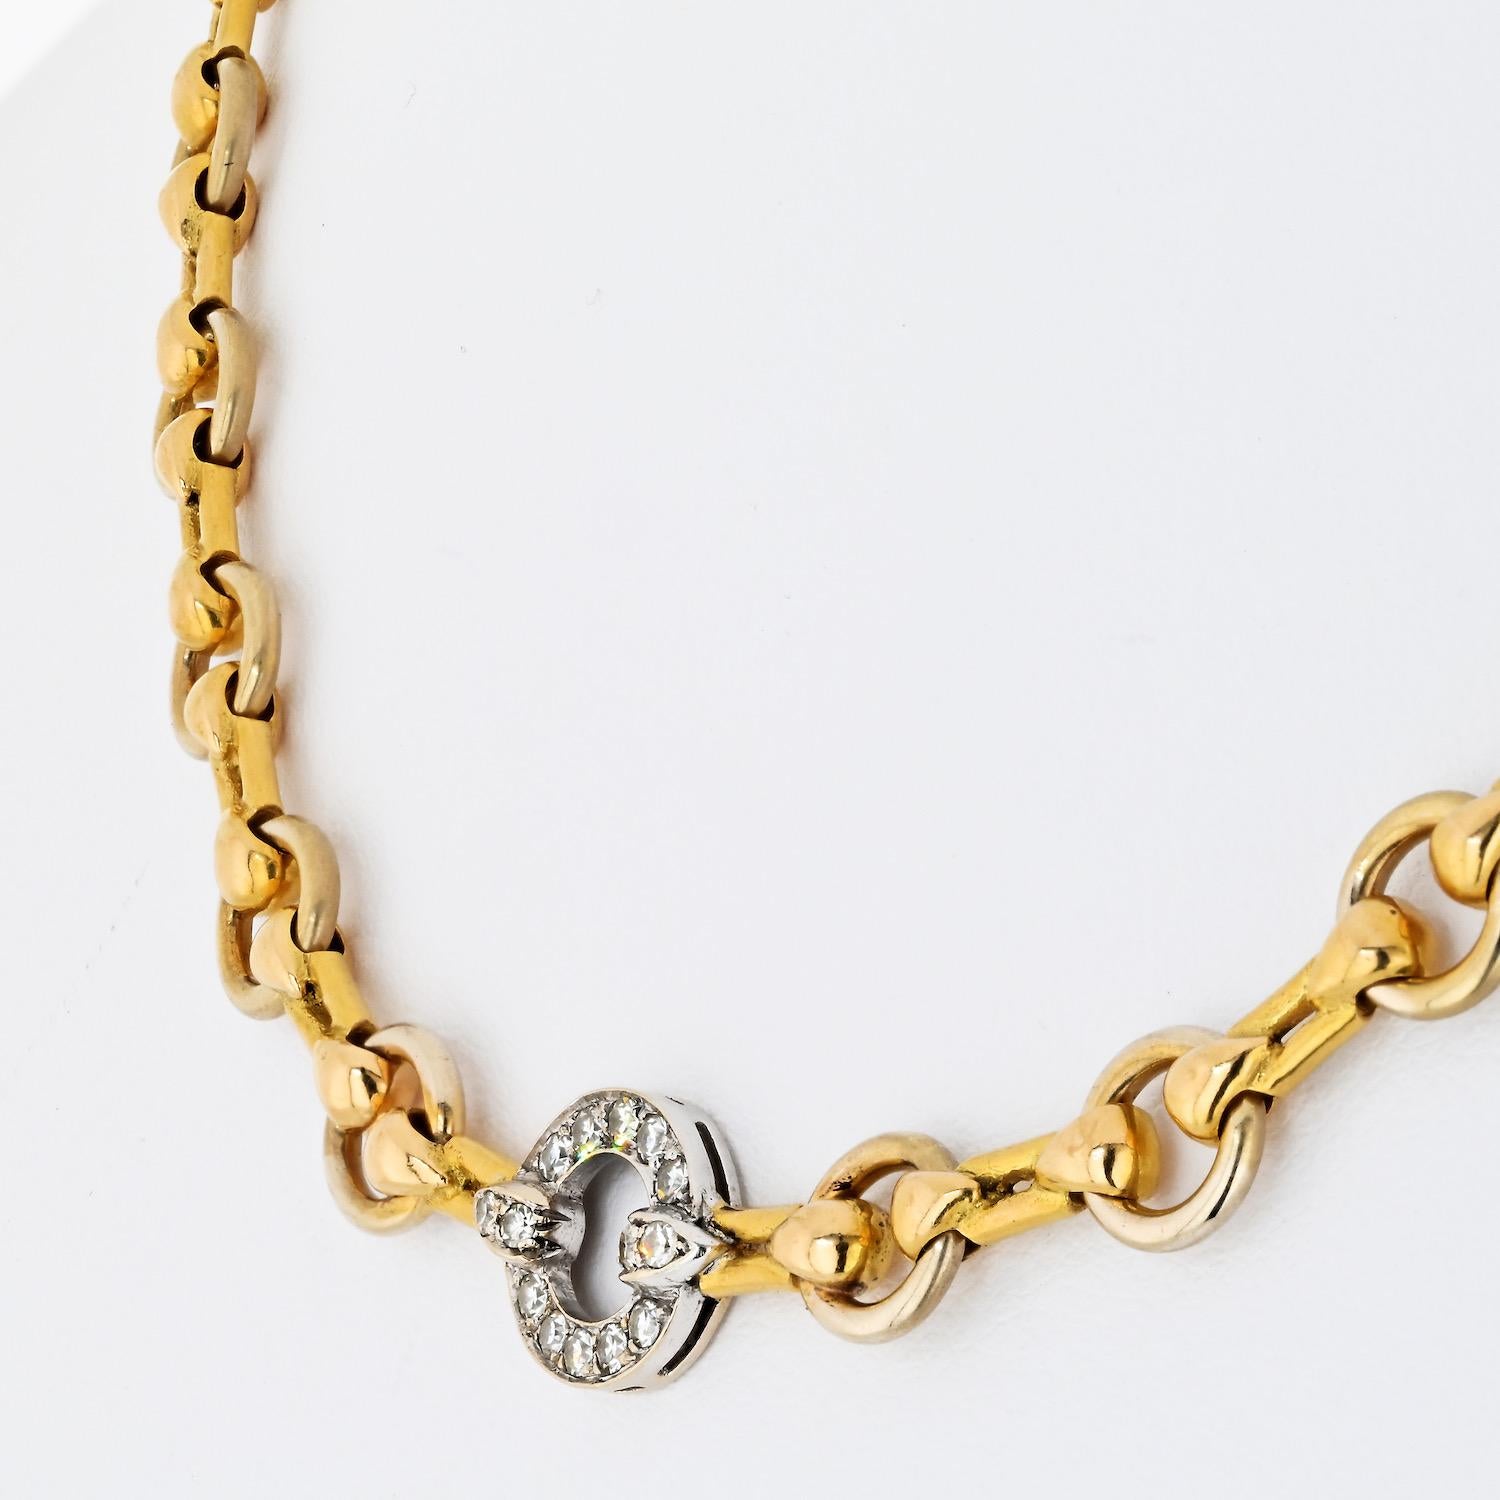 16 inch gold chain